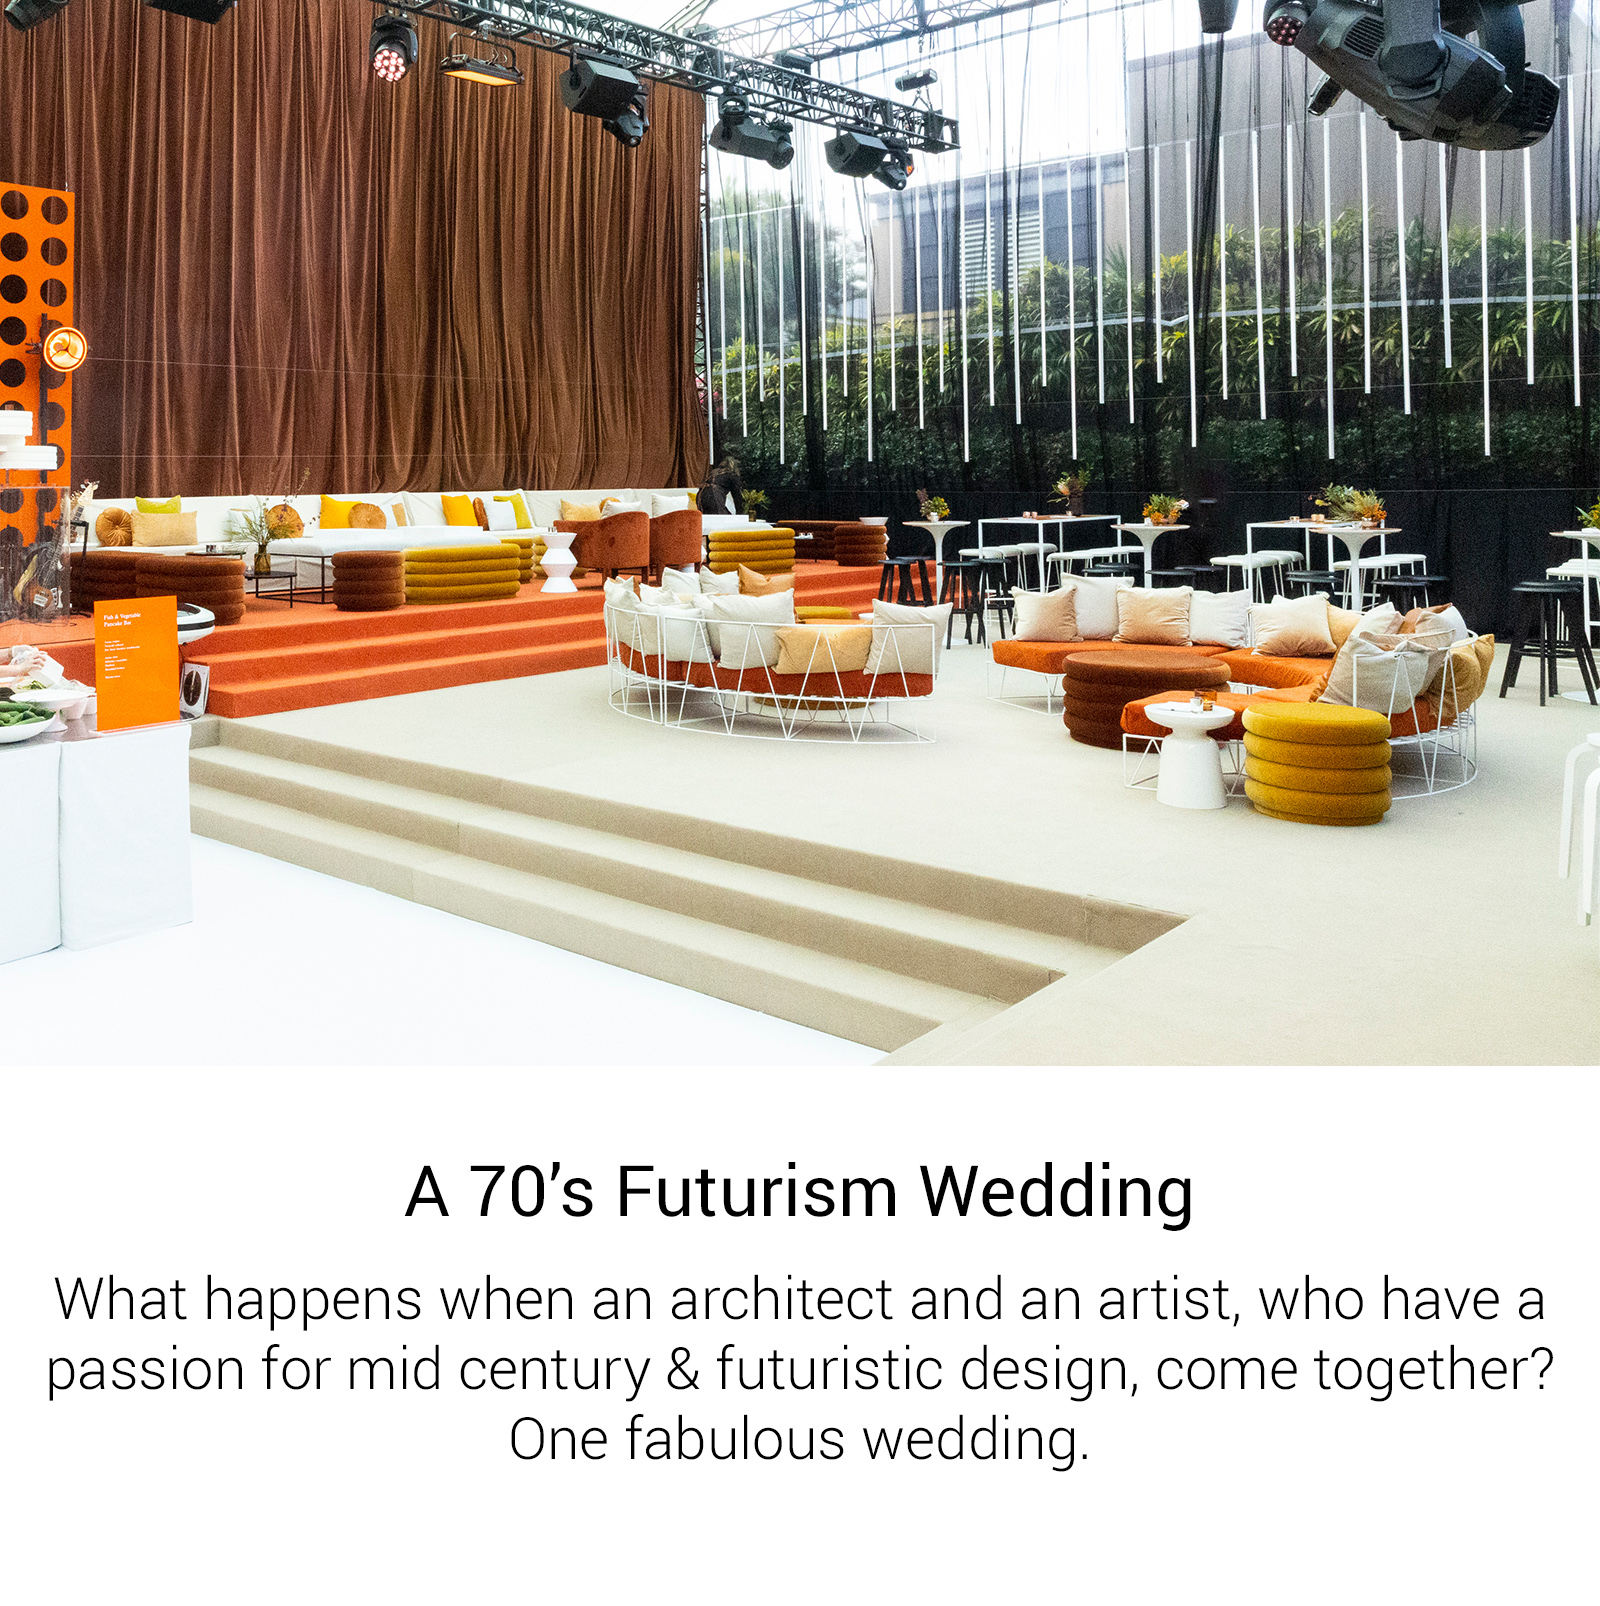 A 70's Futurism Wedding